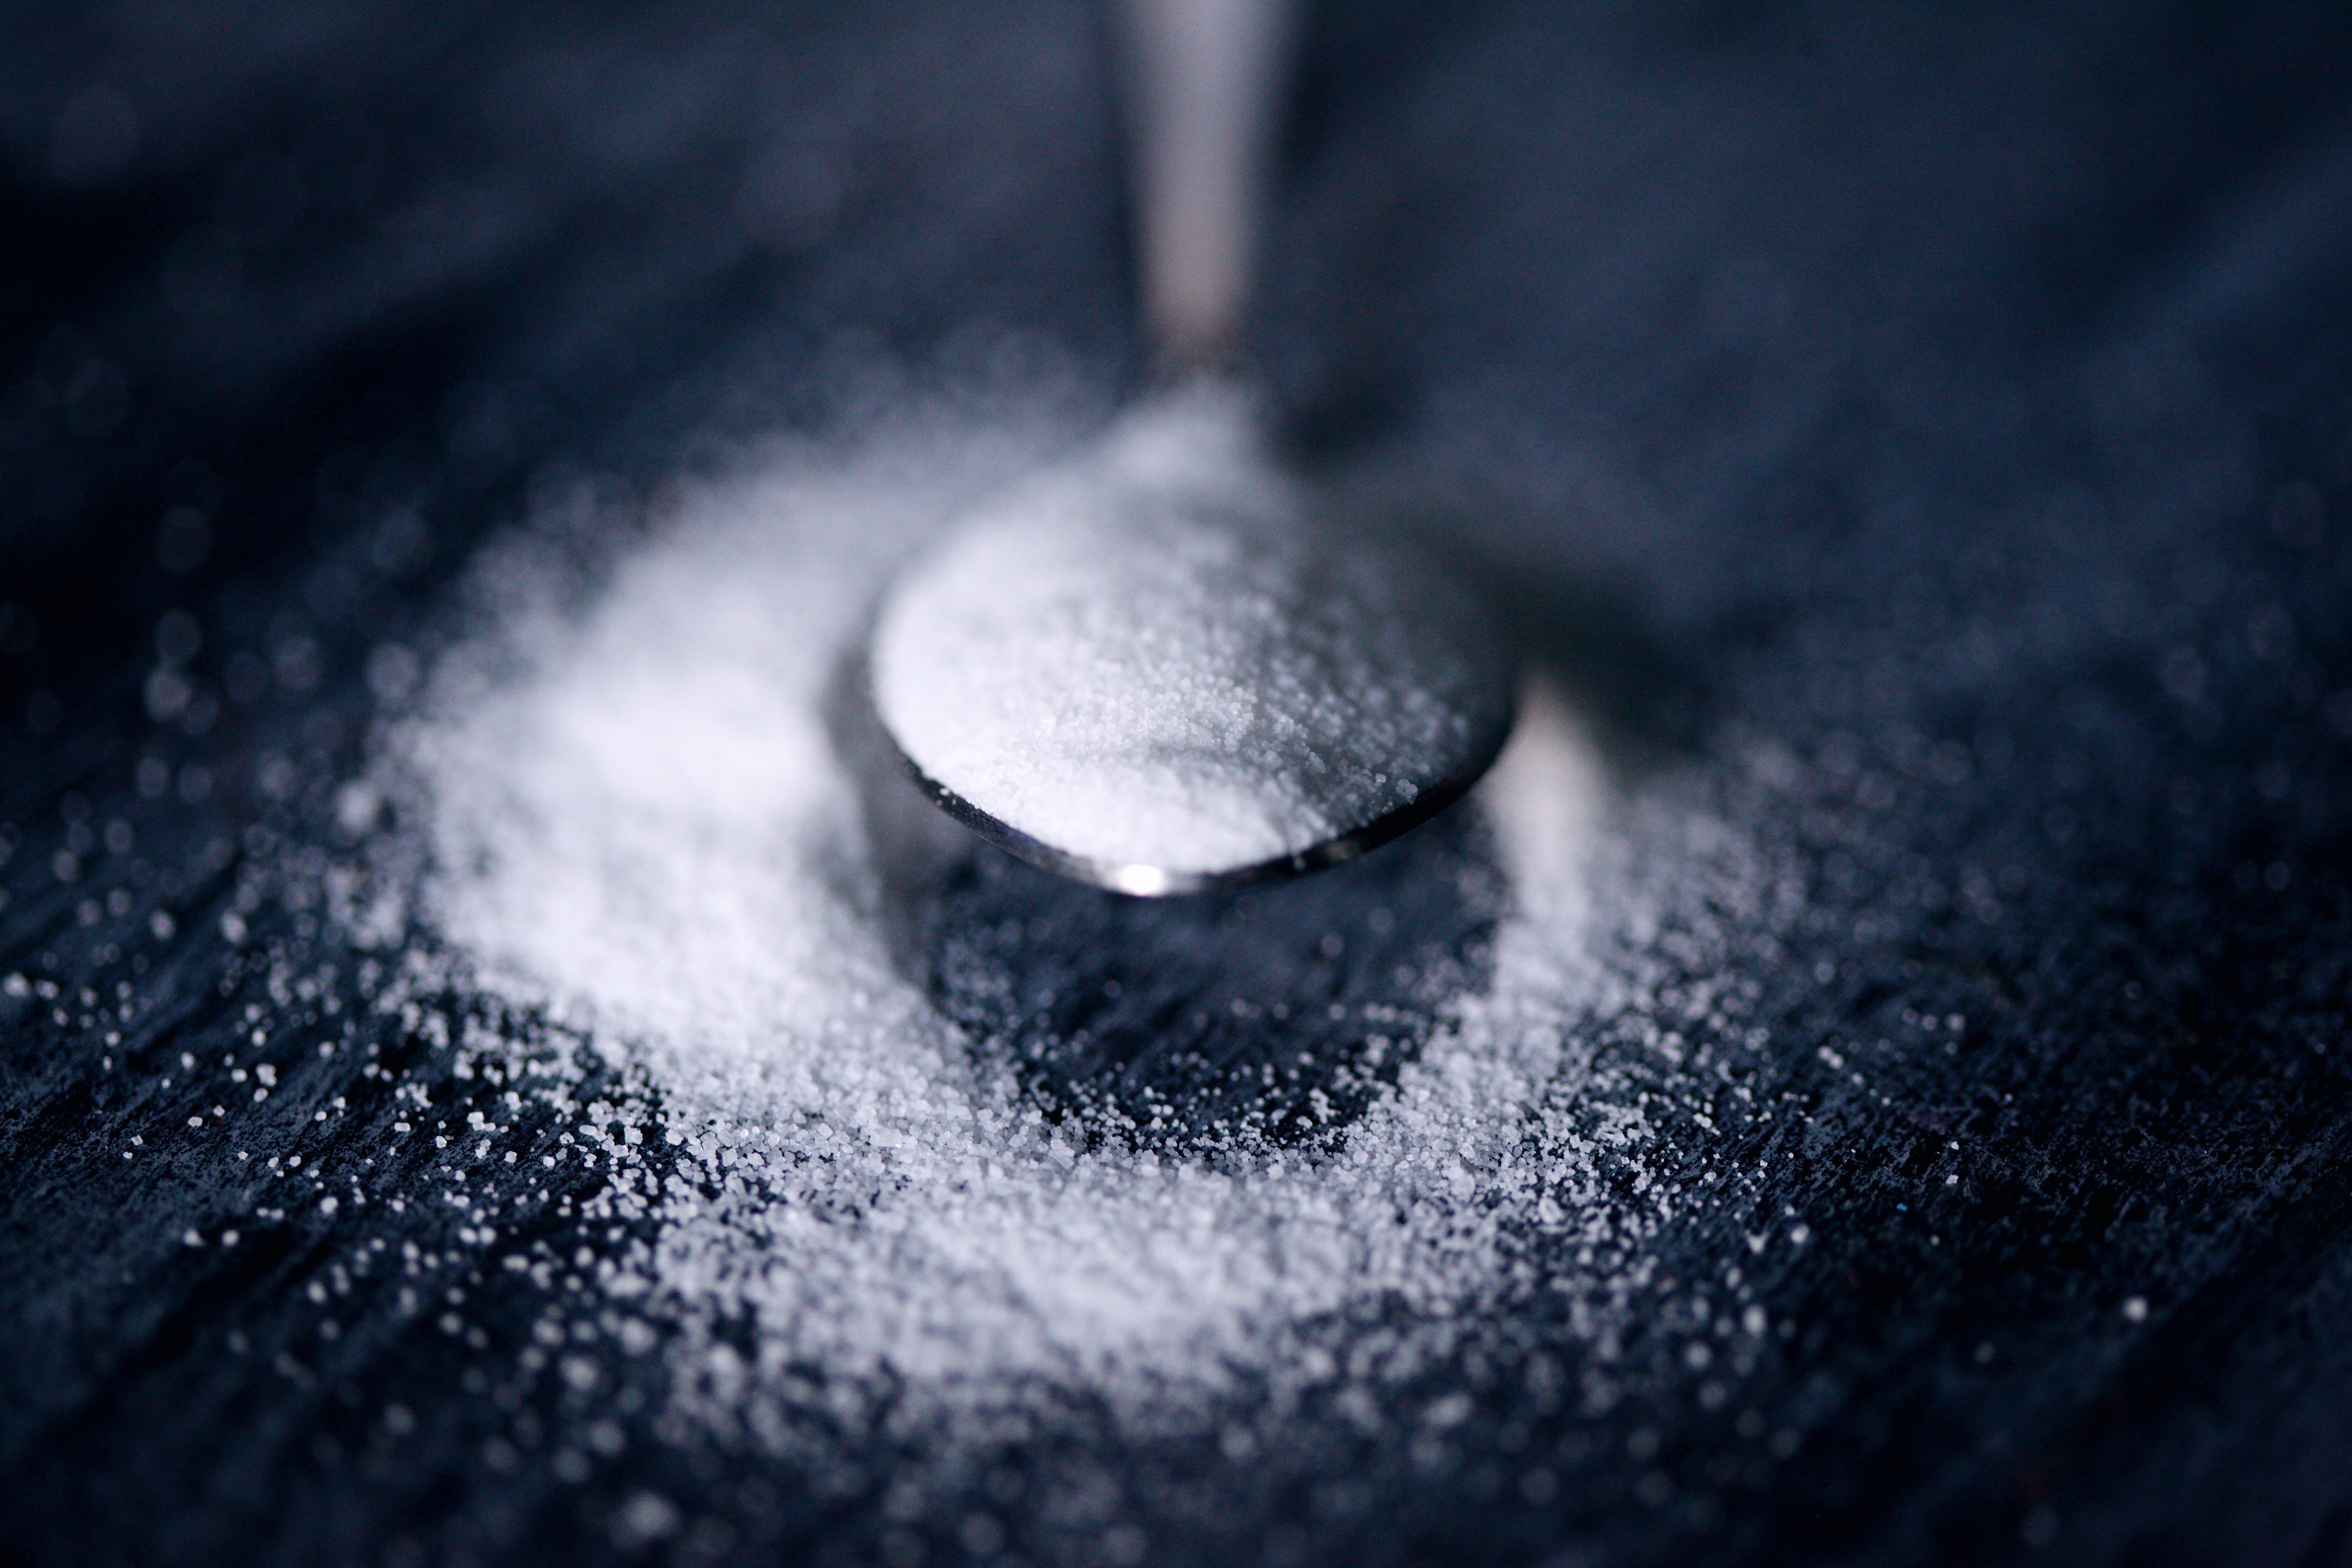 Silver spoon of sugar. | Source: Unsplash